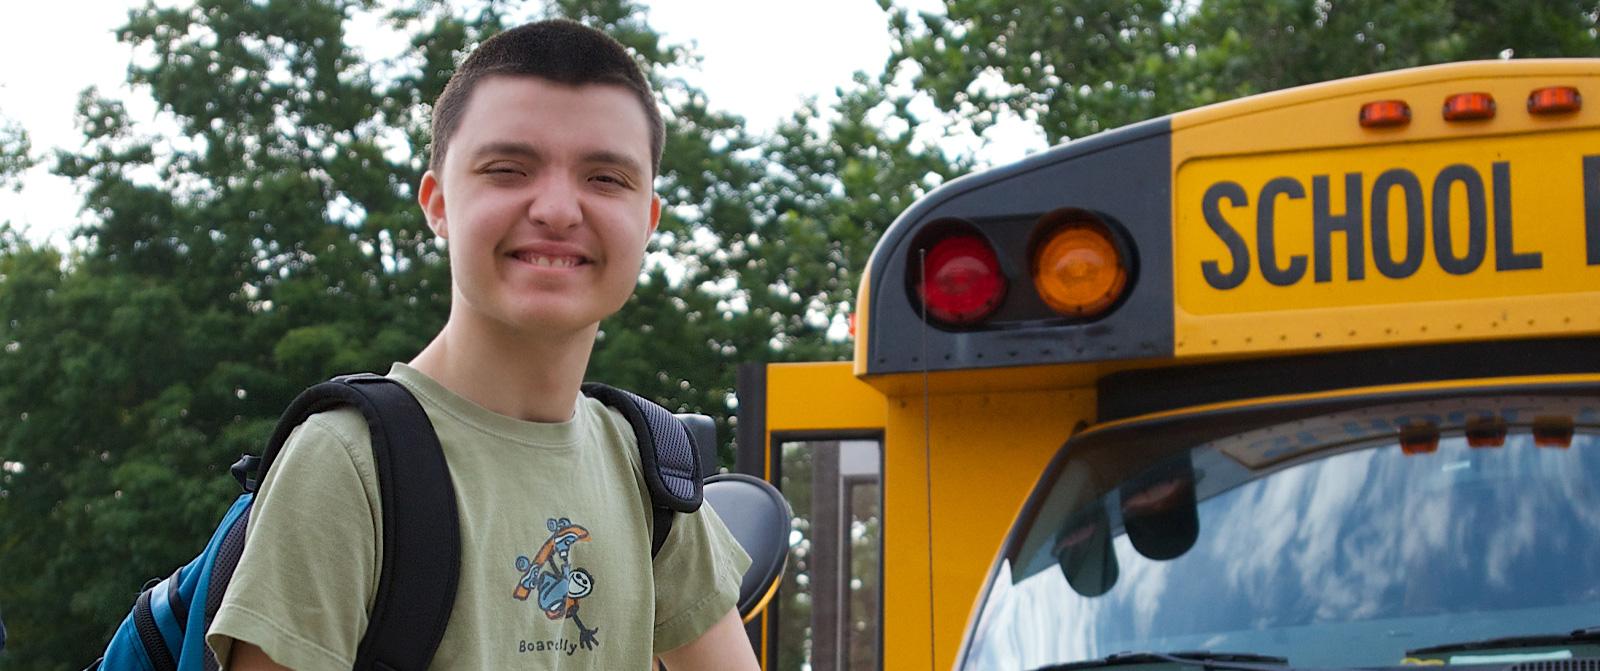 Male Student arrives at Midland School on School Bus